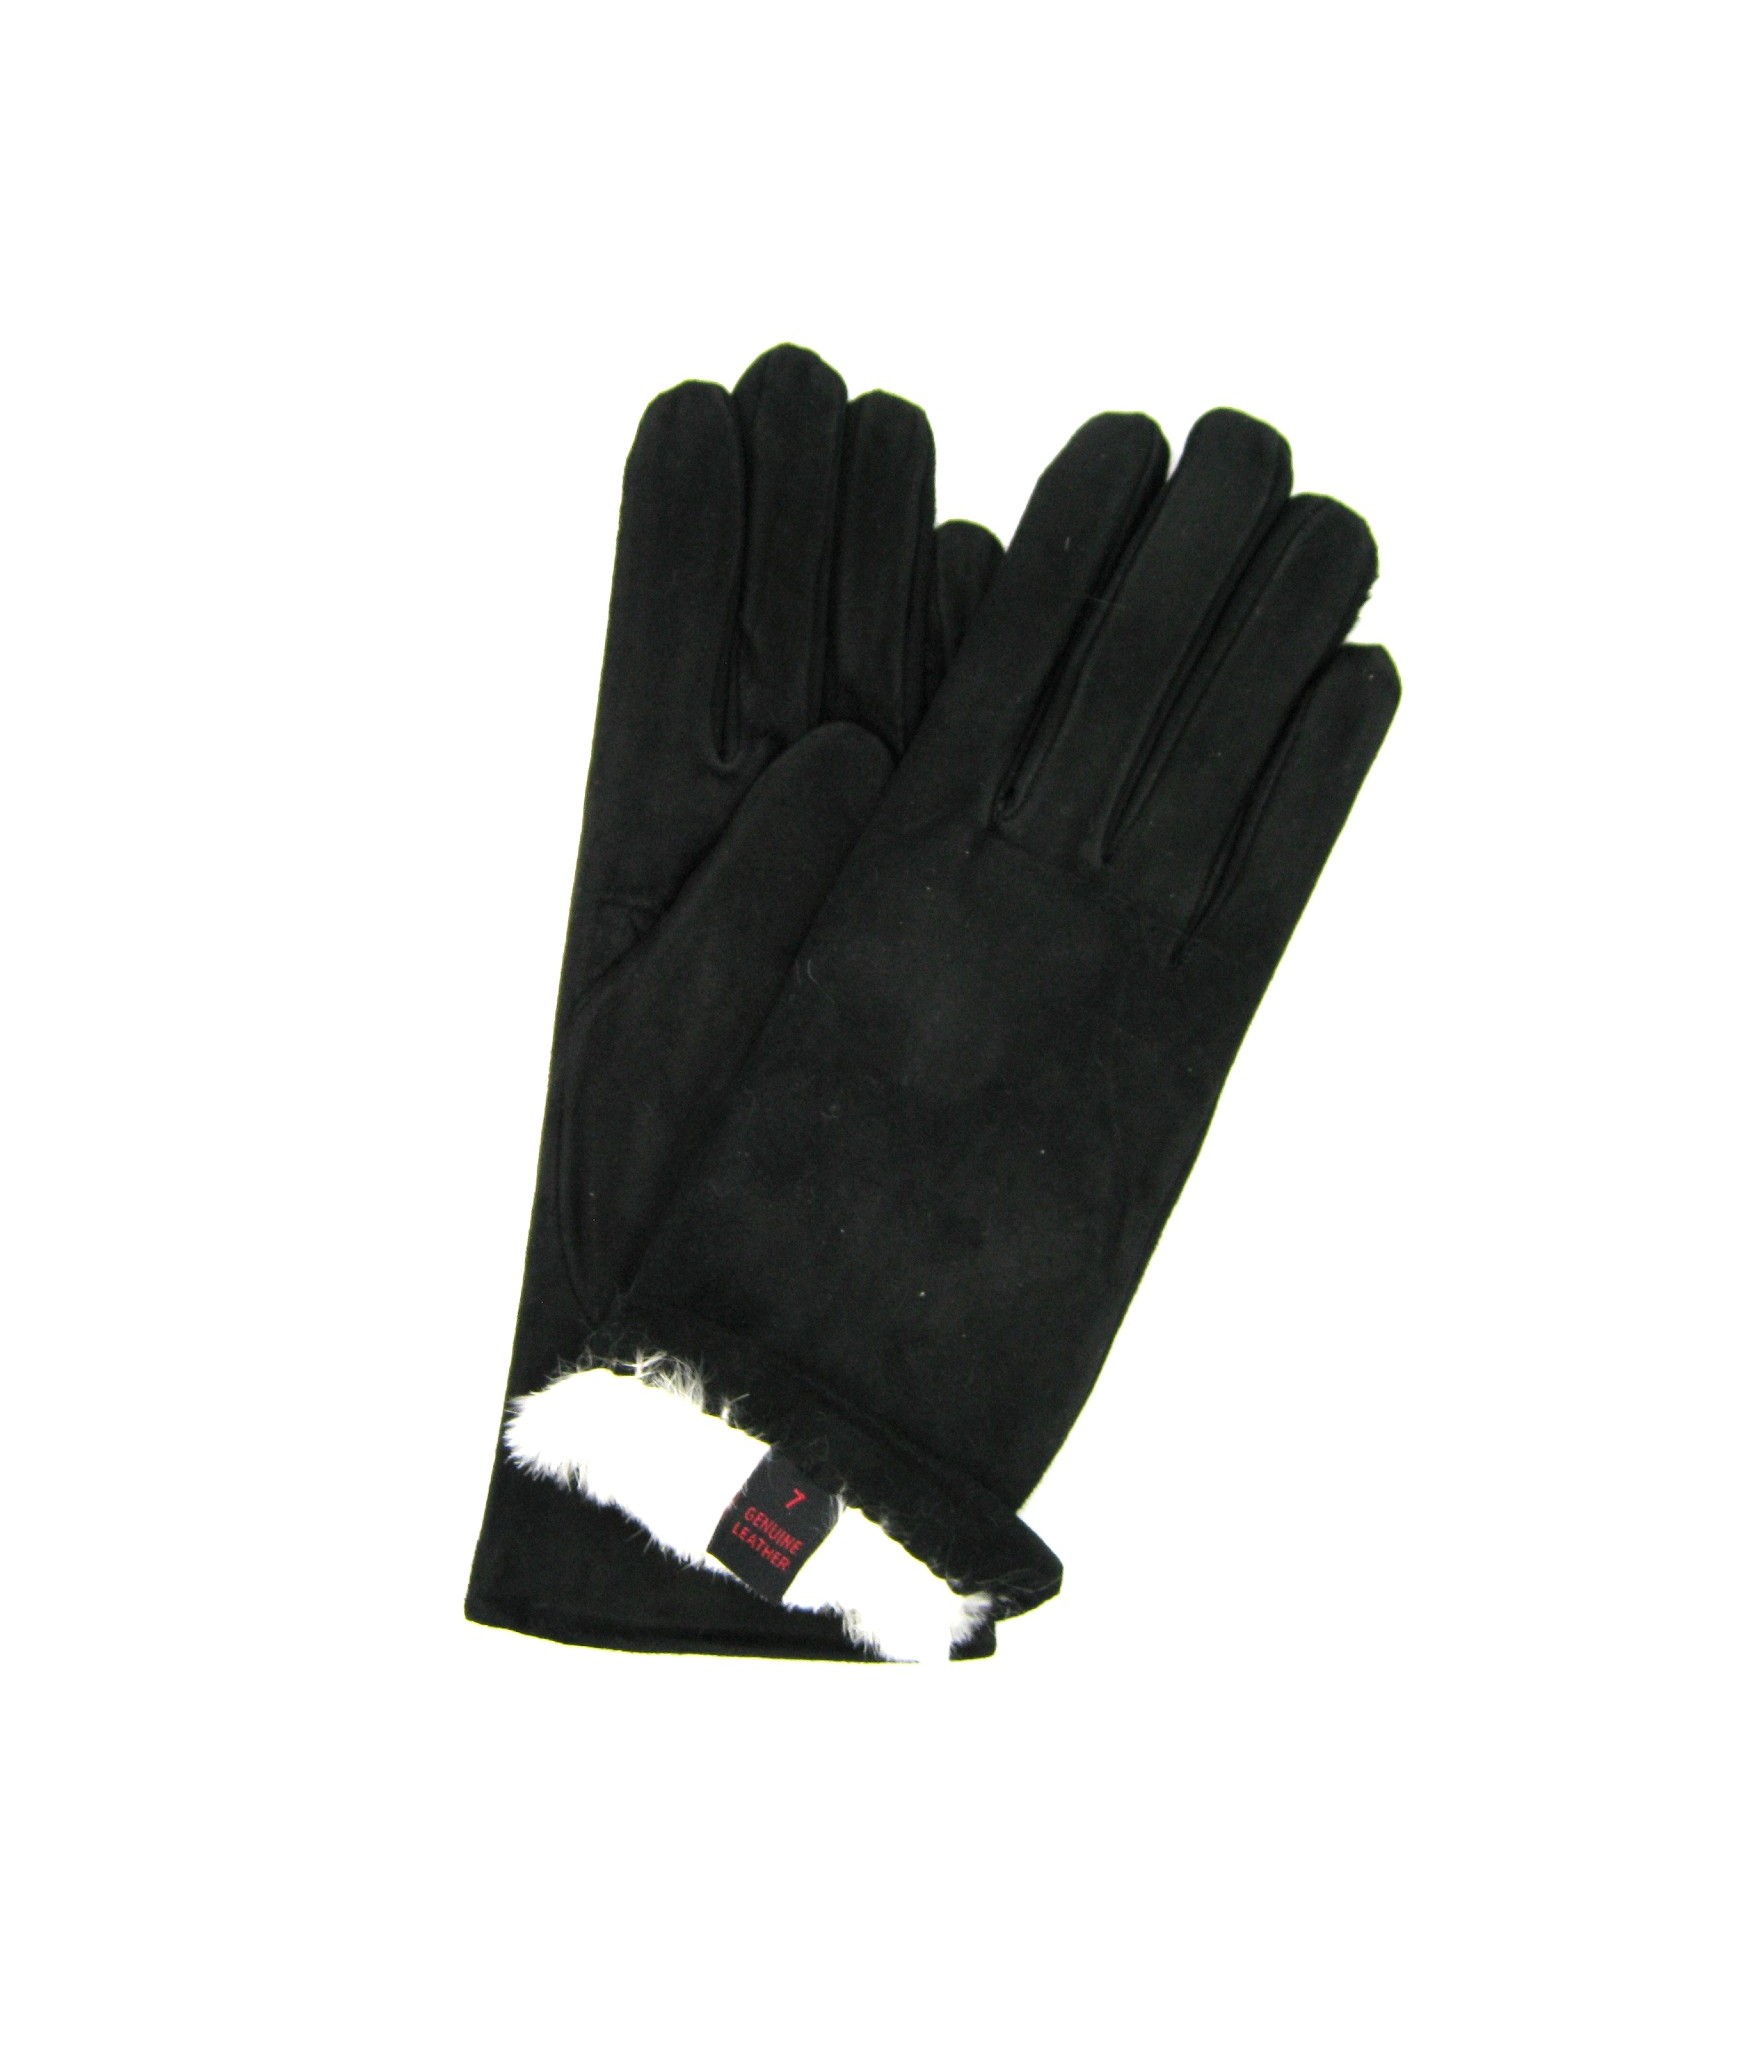 Woman Artik Suede Nappa leather gloves 2bt Rabbit fur lined